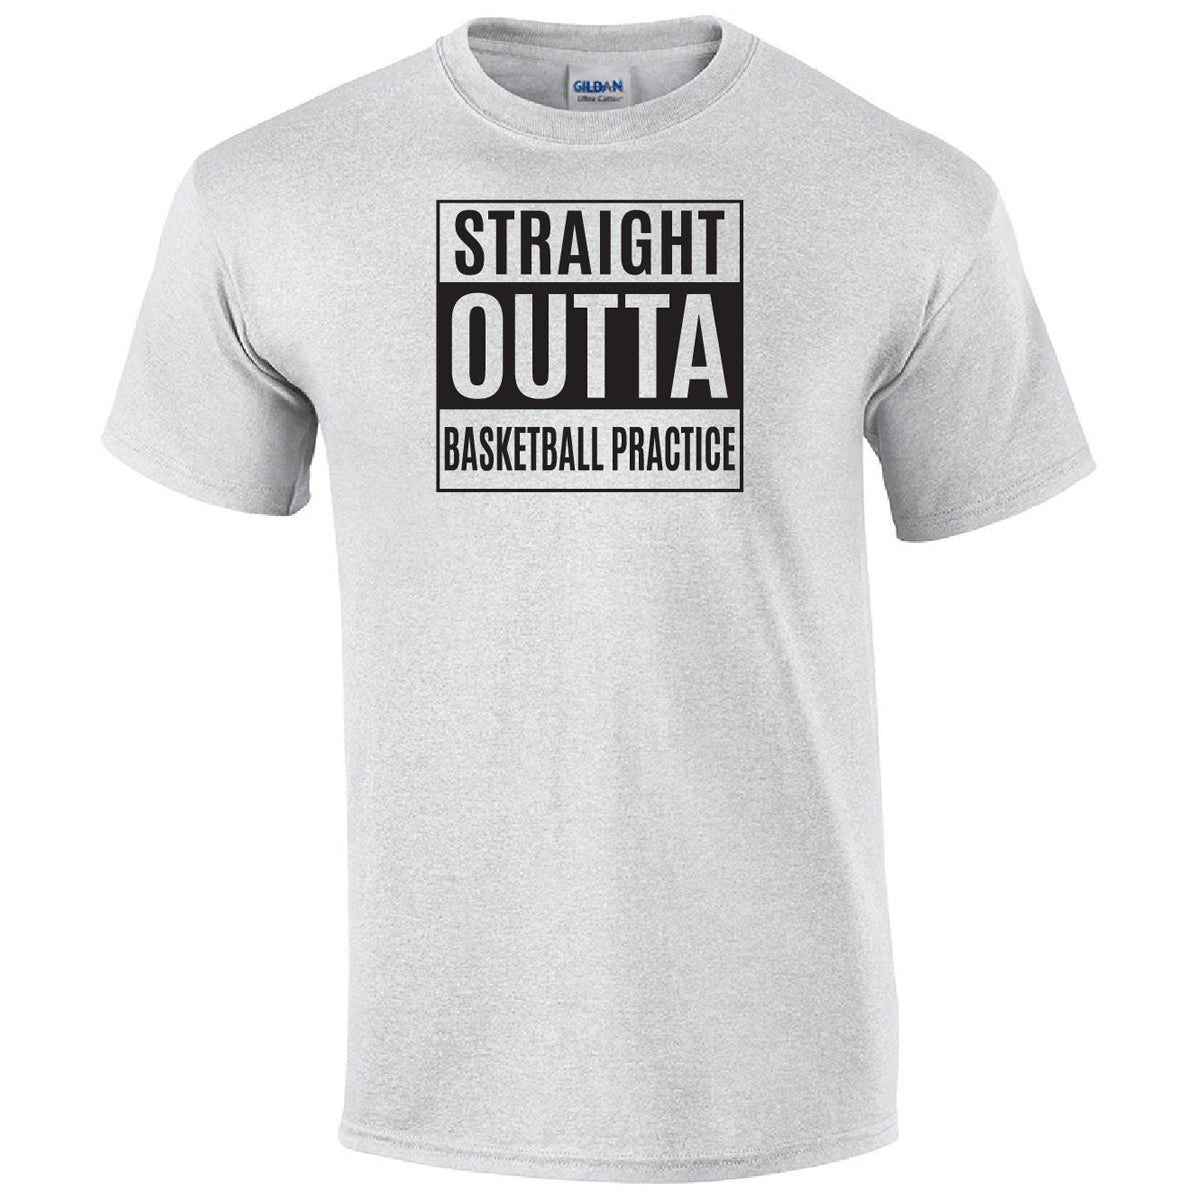 Straight Outta Basketball Practice Tee Humorous Shirt 411 Youth Medium Ash 